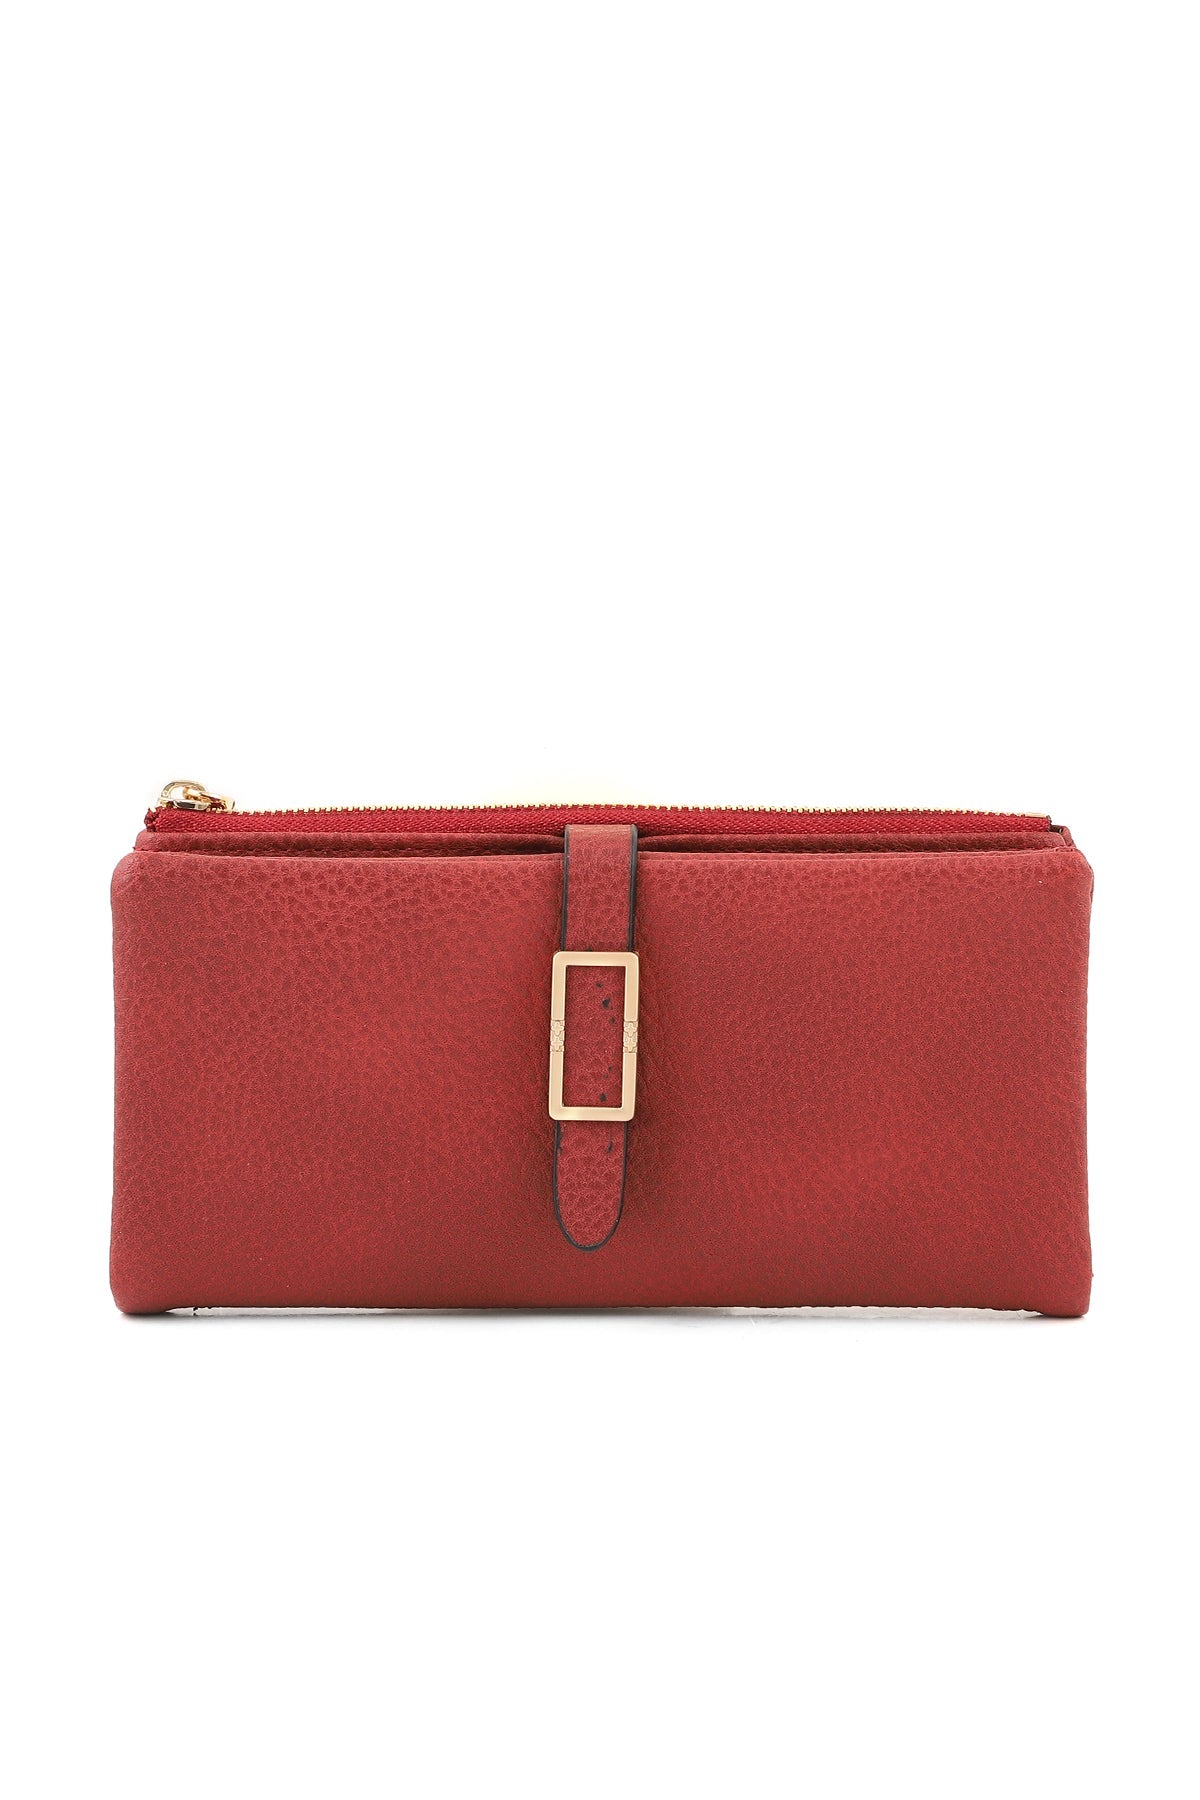 Wristlet Wallet B26039-Red